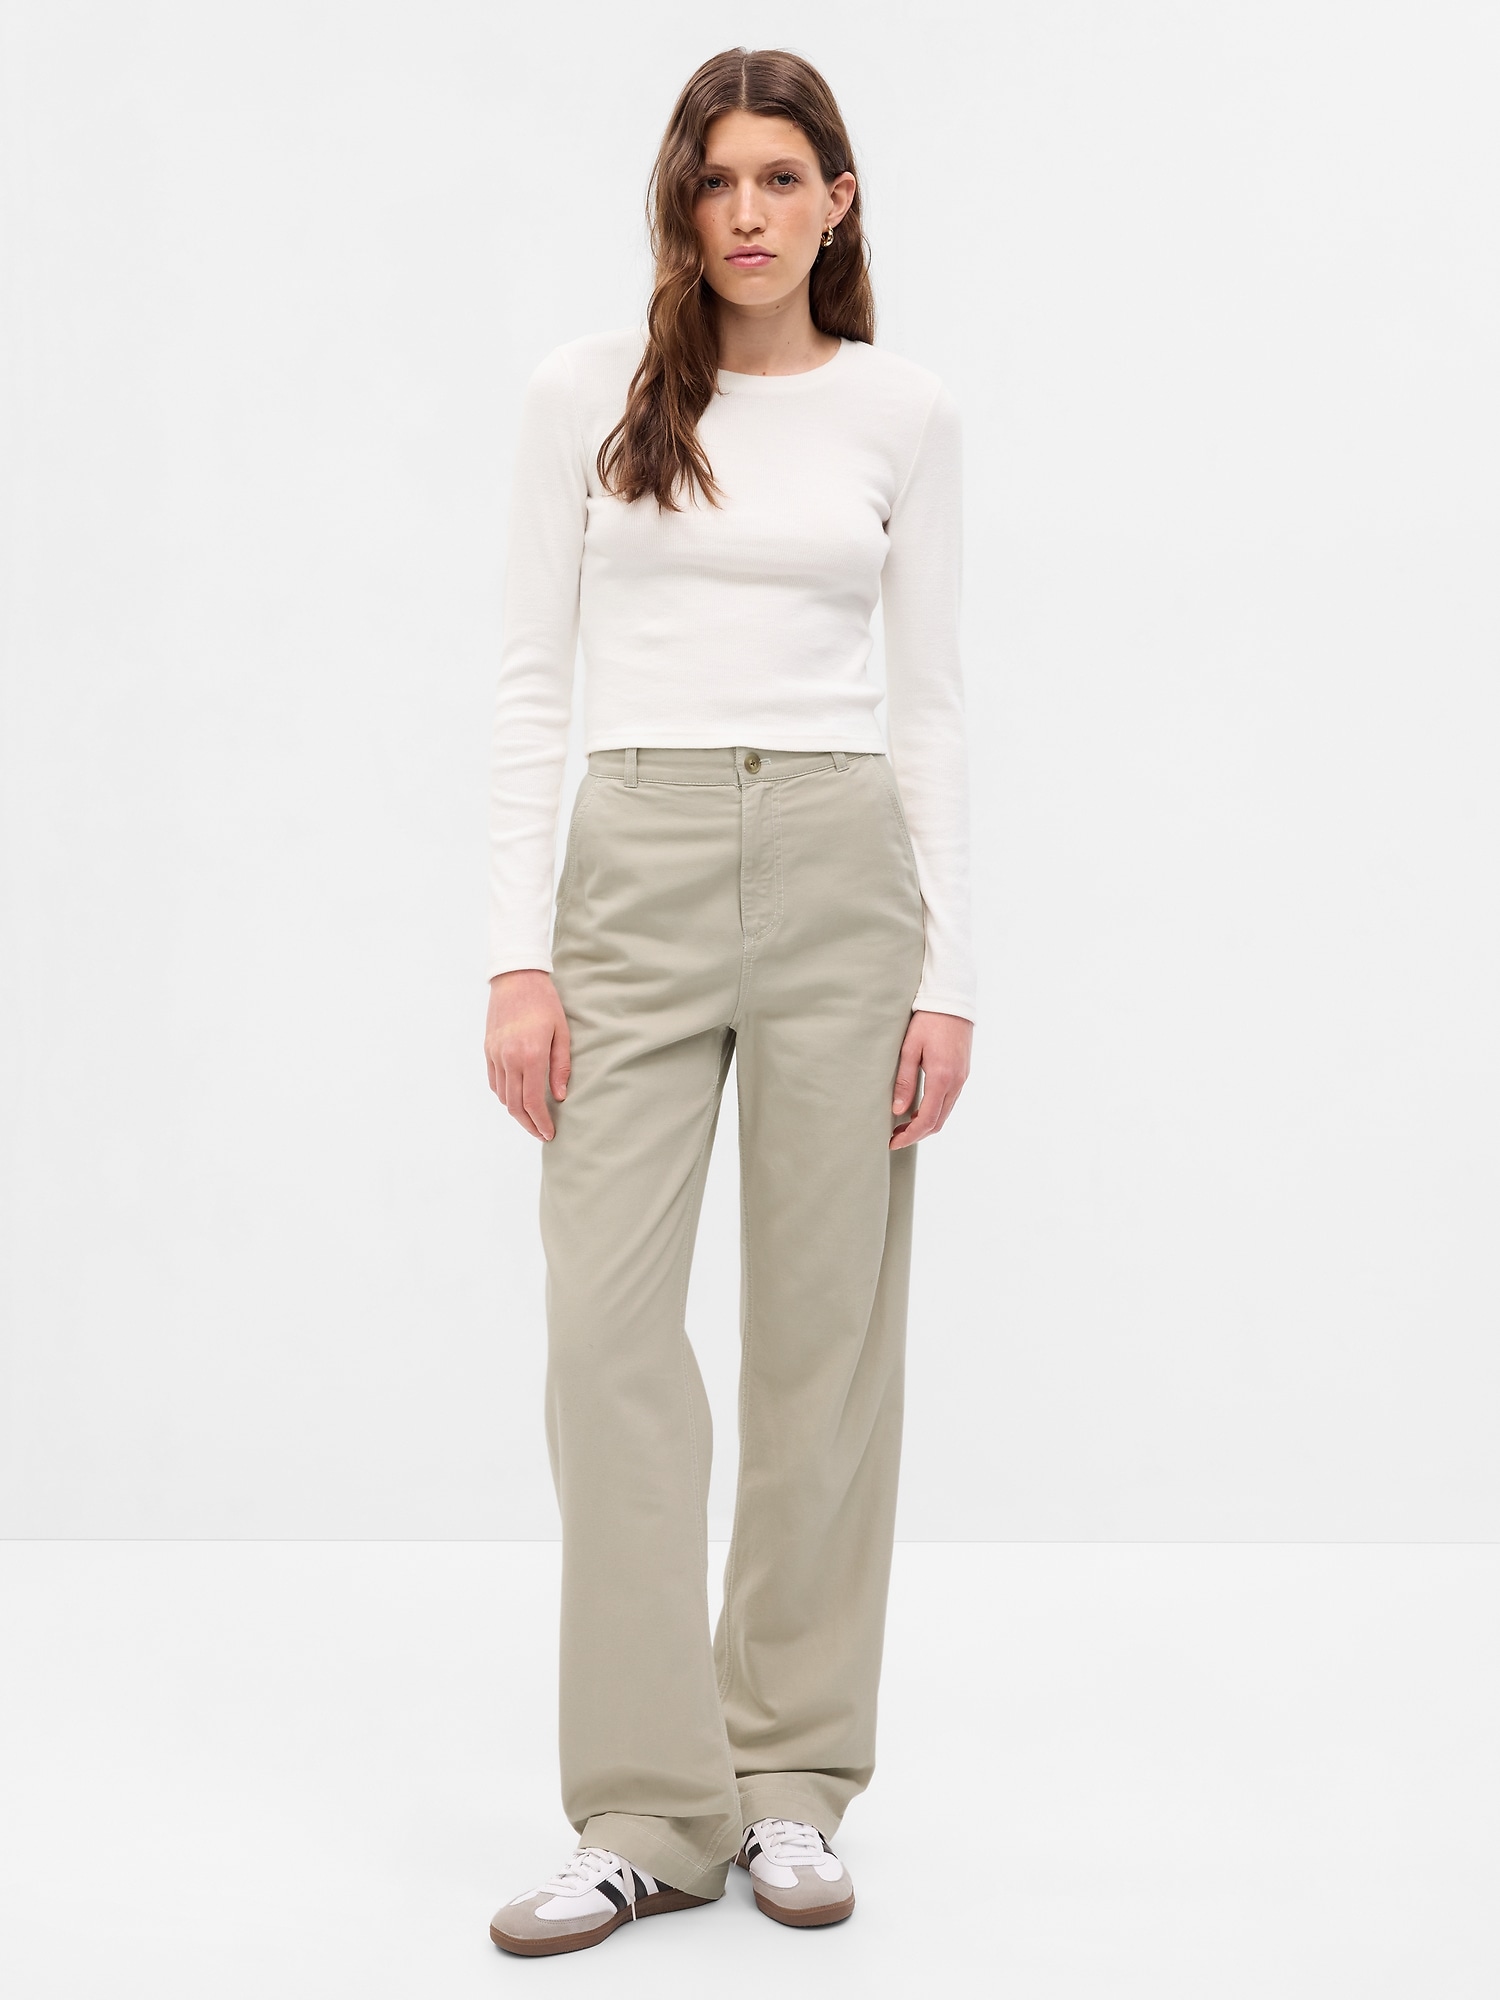 Gap Khaki Trouser Pants, Women’s Size 16 Regular, NEW